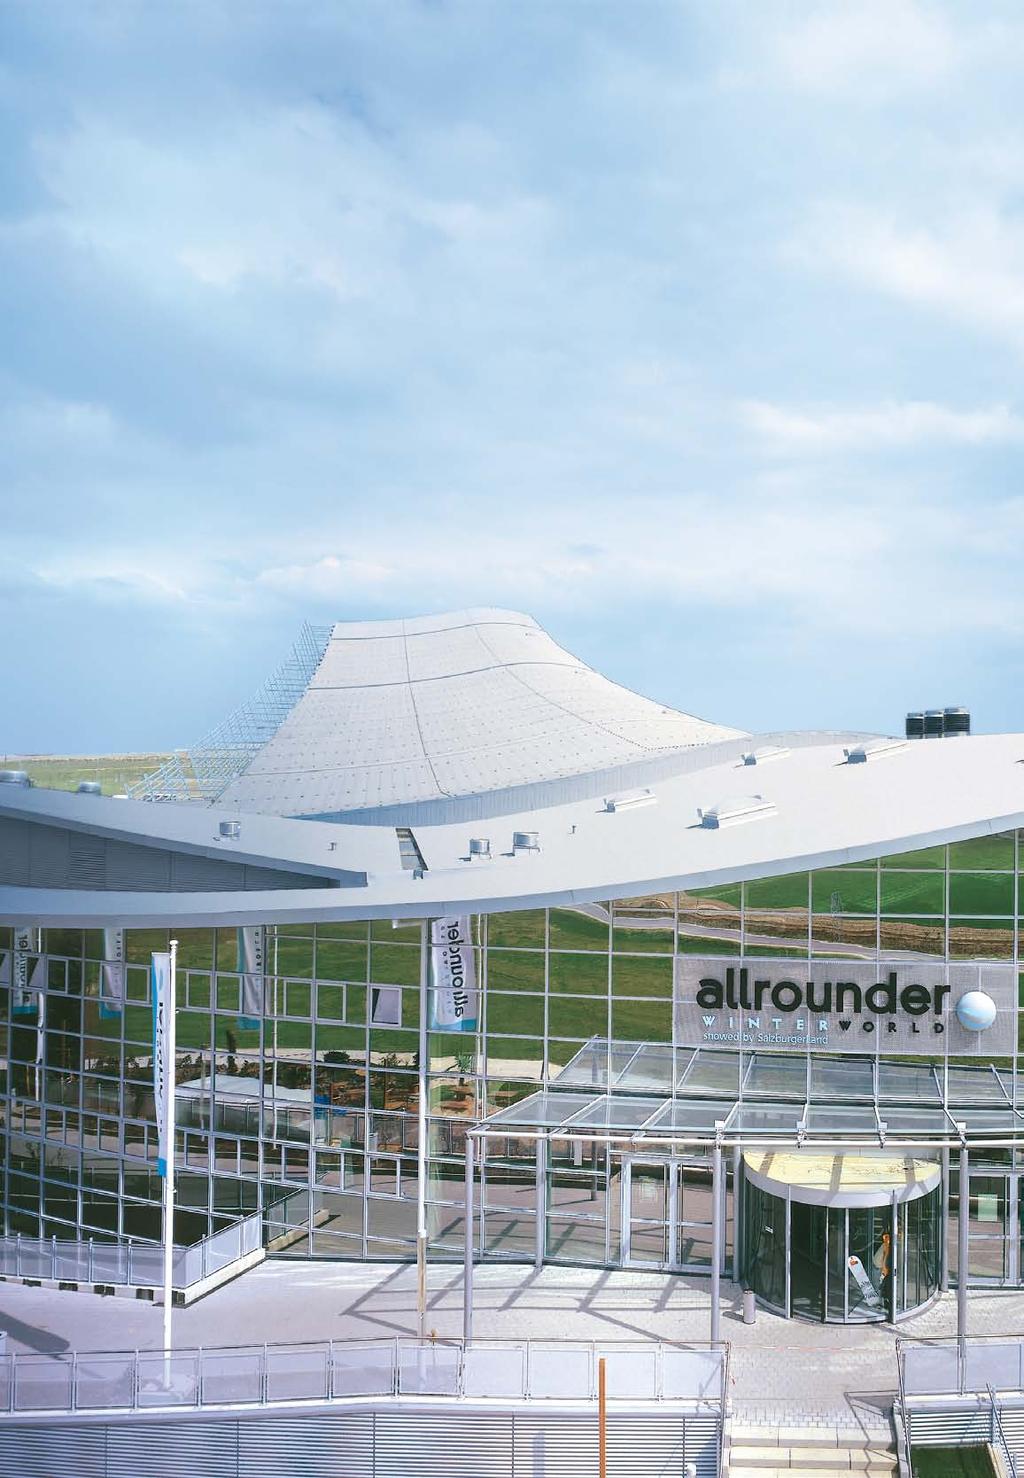 The allrounder WINTER WORLD in Neuss near Düsseldorf is the largest Ski hall in Europe.